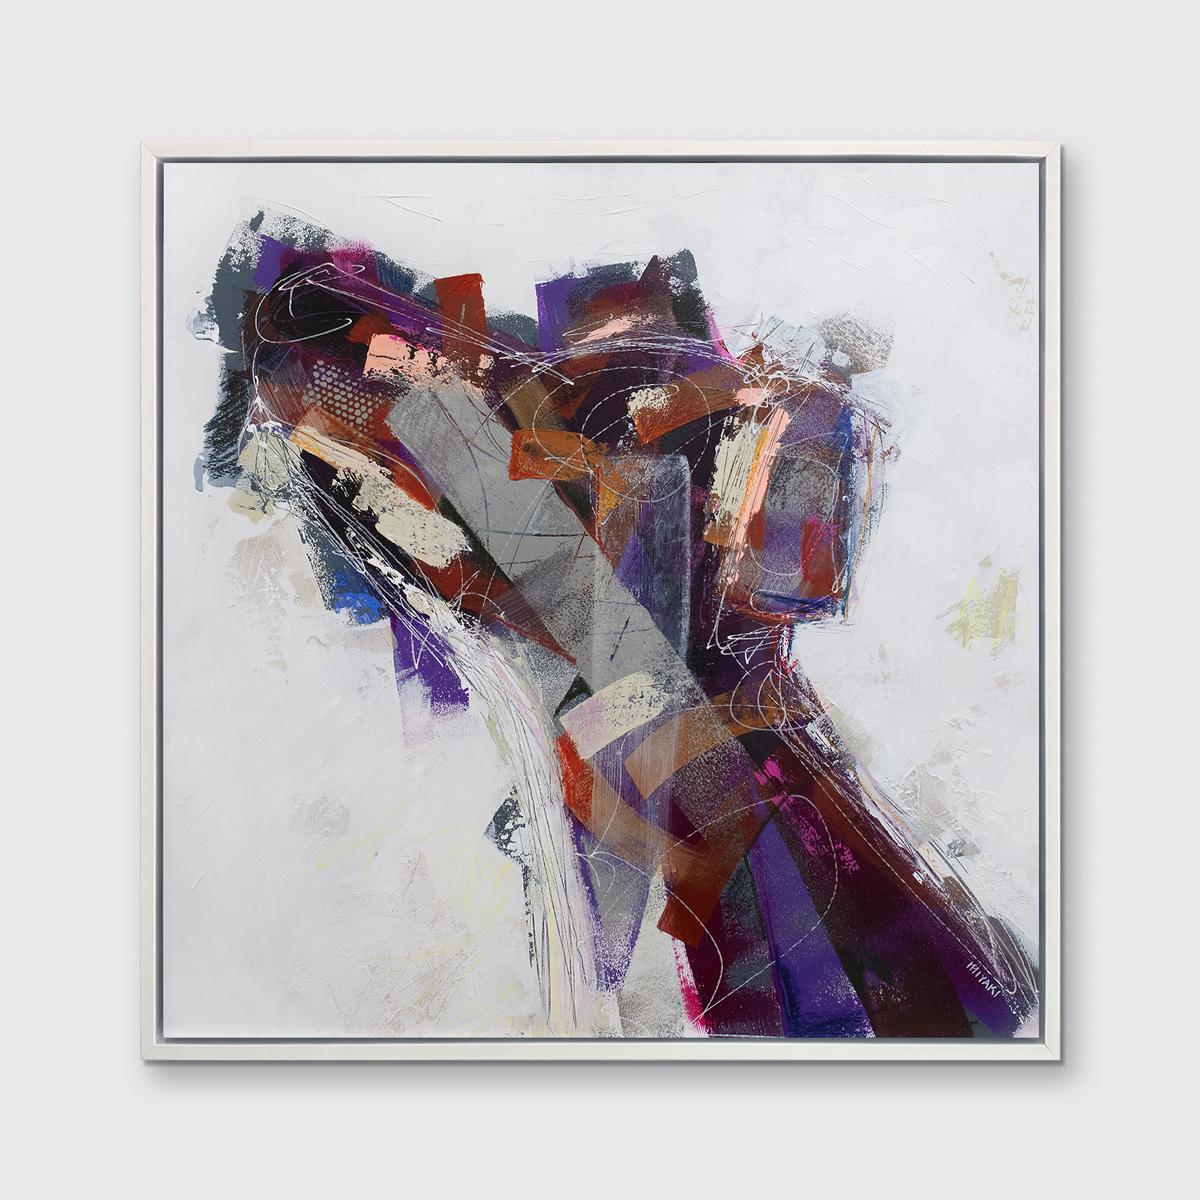 « Colorful Basenji » Impression giclée en édition limitée, 36